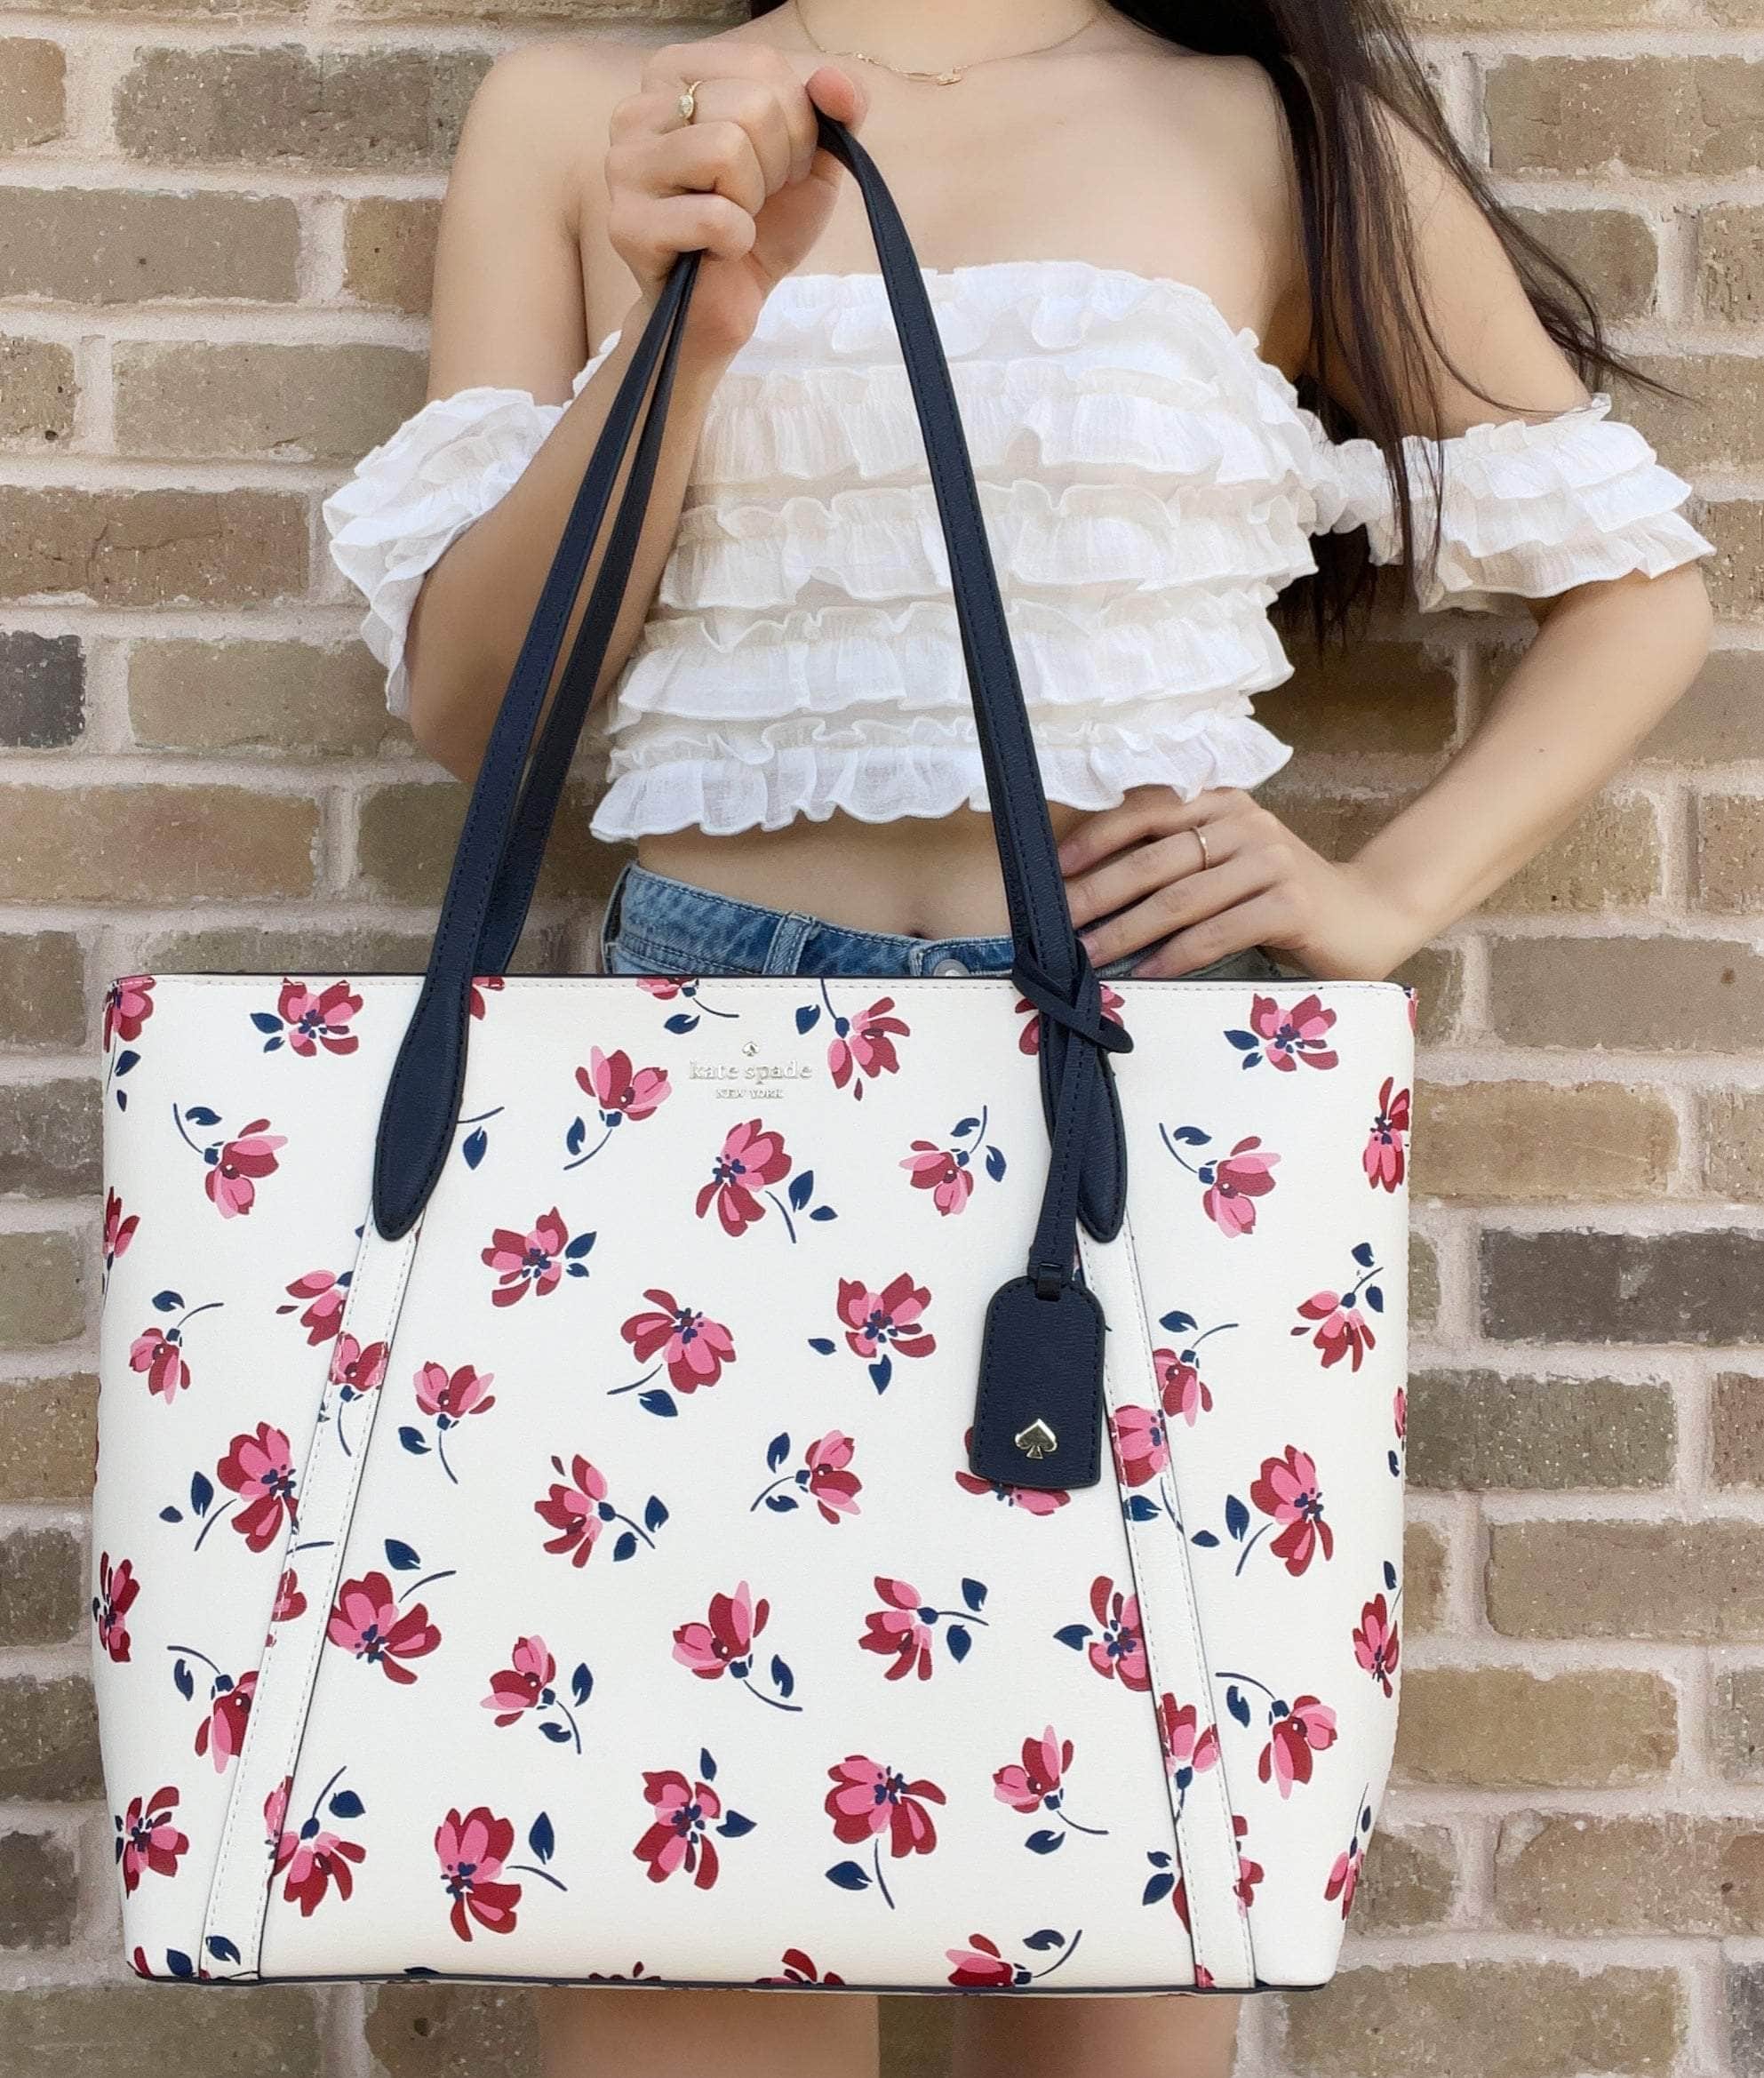 Amazon Live - Kate Spade New York Floral Darcy Satchel Crossbody Bag Purse